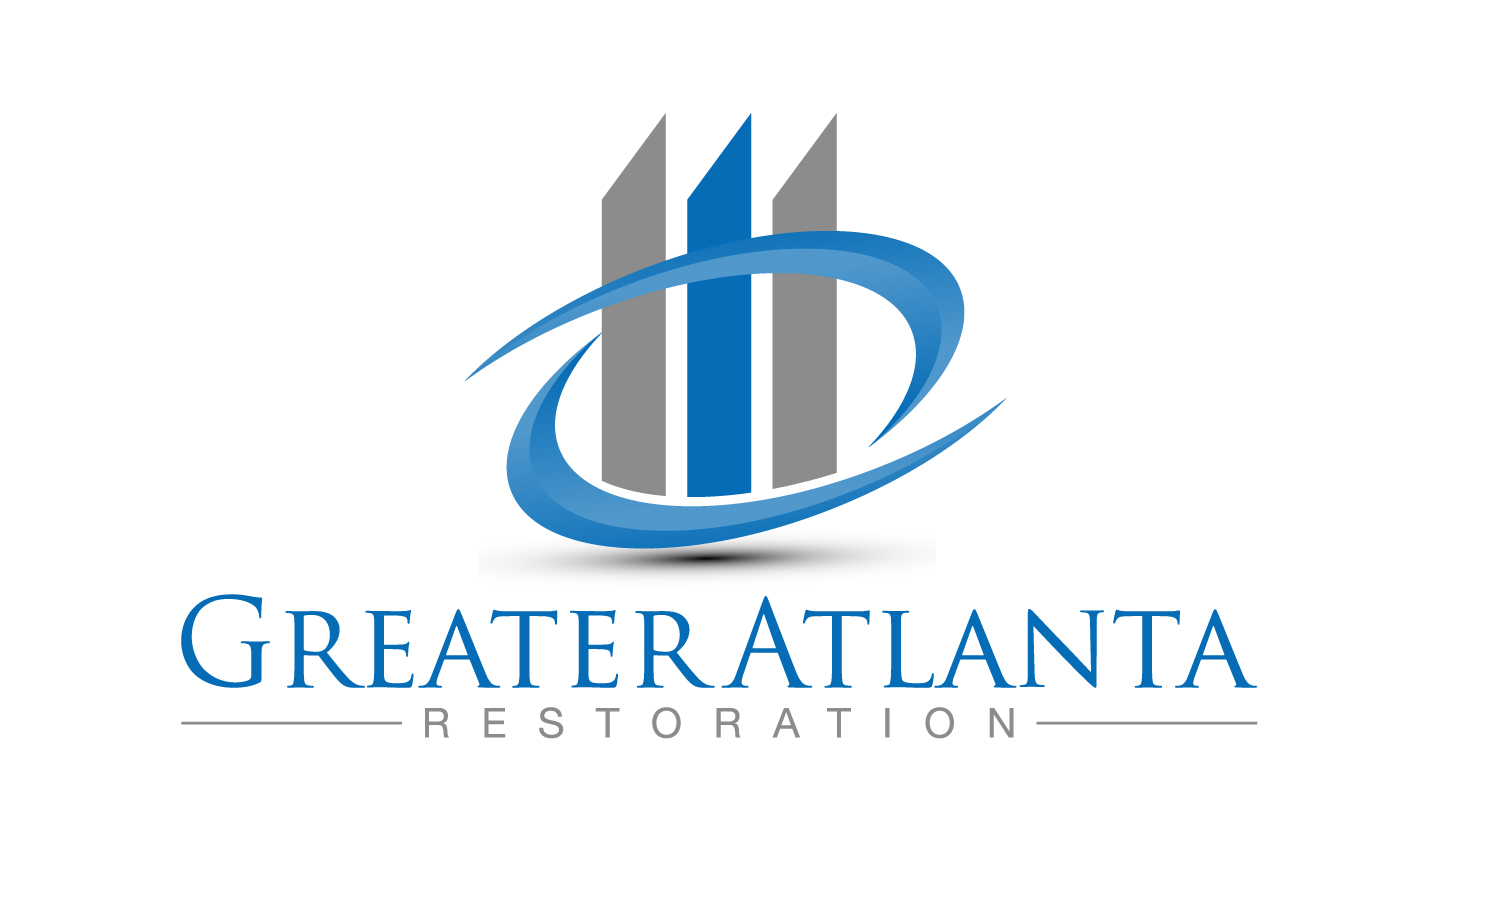 Great atlantic. Great renovated логотип. Гар лого. Estimate logo. Real estimate logo.